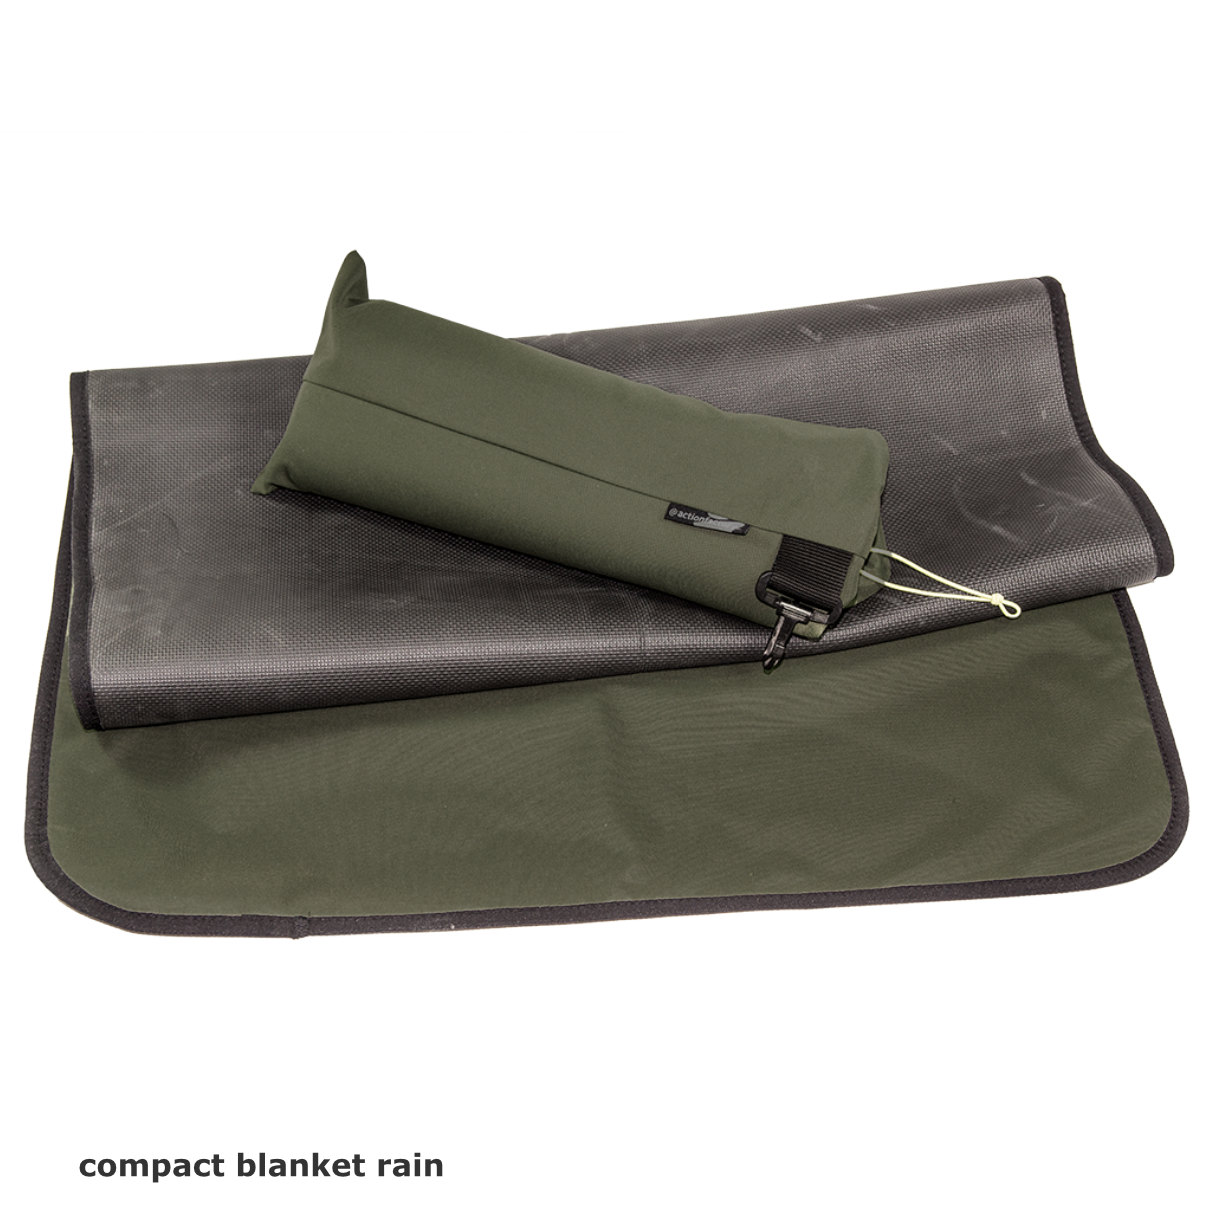 compact blanket rain header